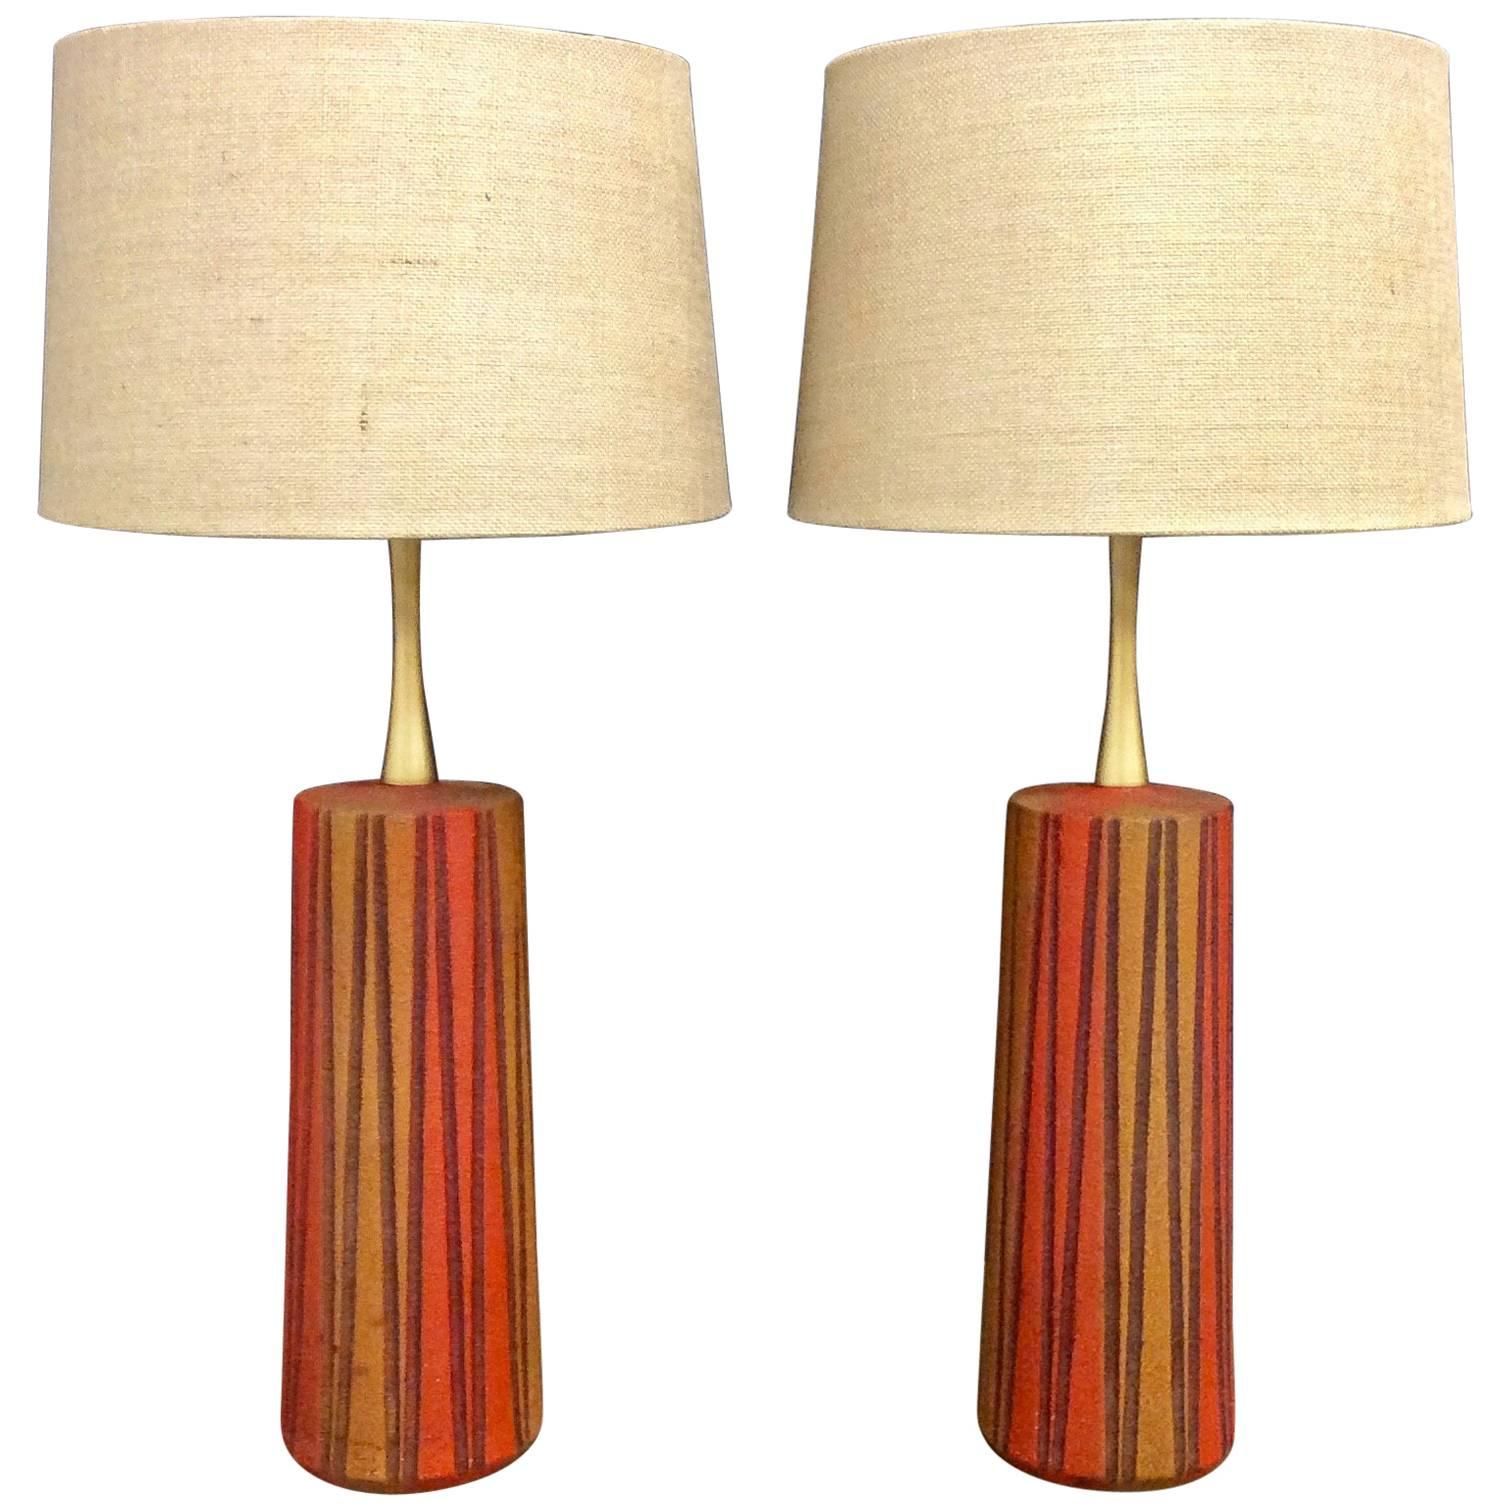 Pair of Vintage Mid-Century Modern Ceramic Table Lamps